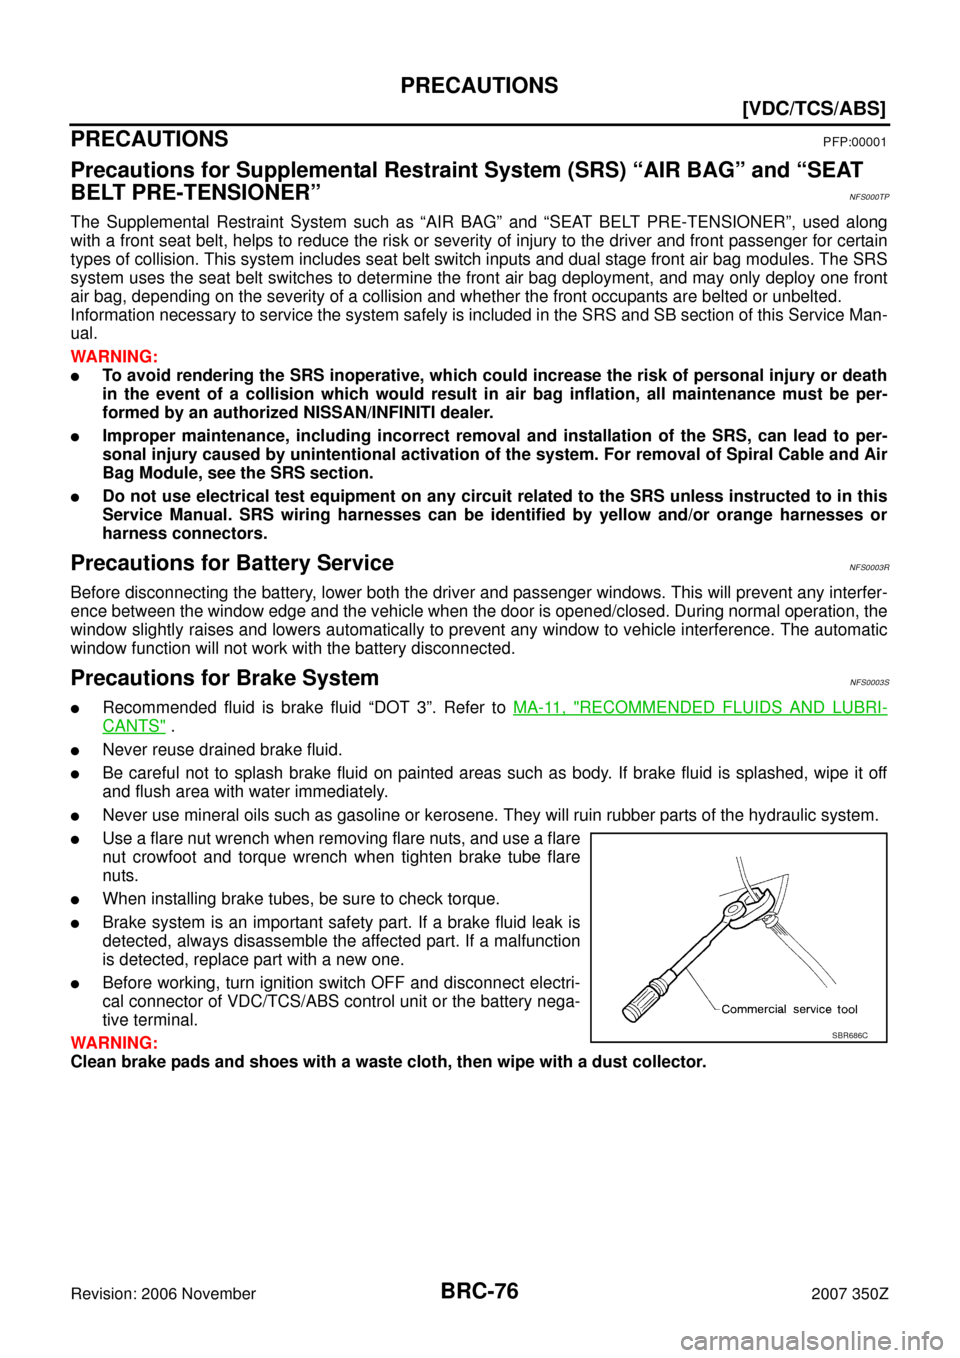 NISSAN 350Z 2007 Z33 Brake Control System User Guide BRC-76
[VDC/TCS/ABS]
PRECAUTIONS
Revision: 2006 November2007 350Z
[VDC/TCS/ABS]PRECAUTIONSPFP:00001
Precautions for Supplemental Restraint System (SRS) “AIR BAG” and “SEAT 
BELT PRE-TENSIONER”